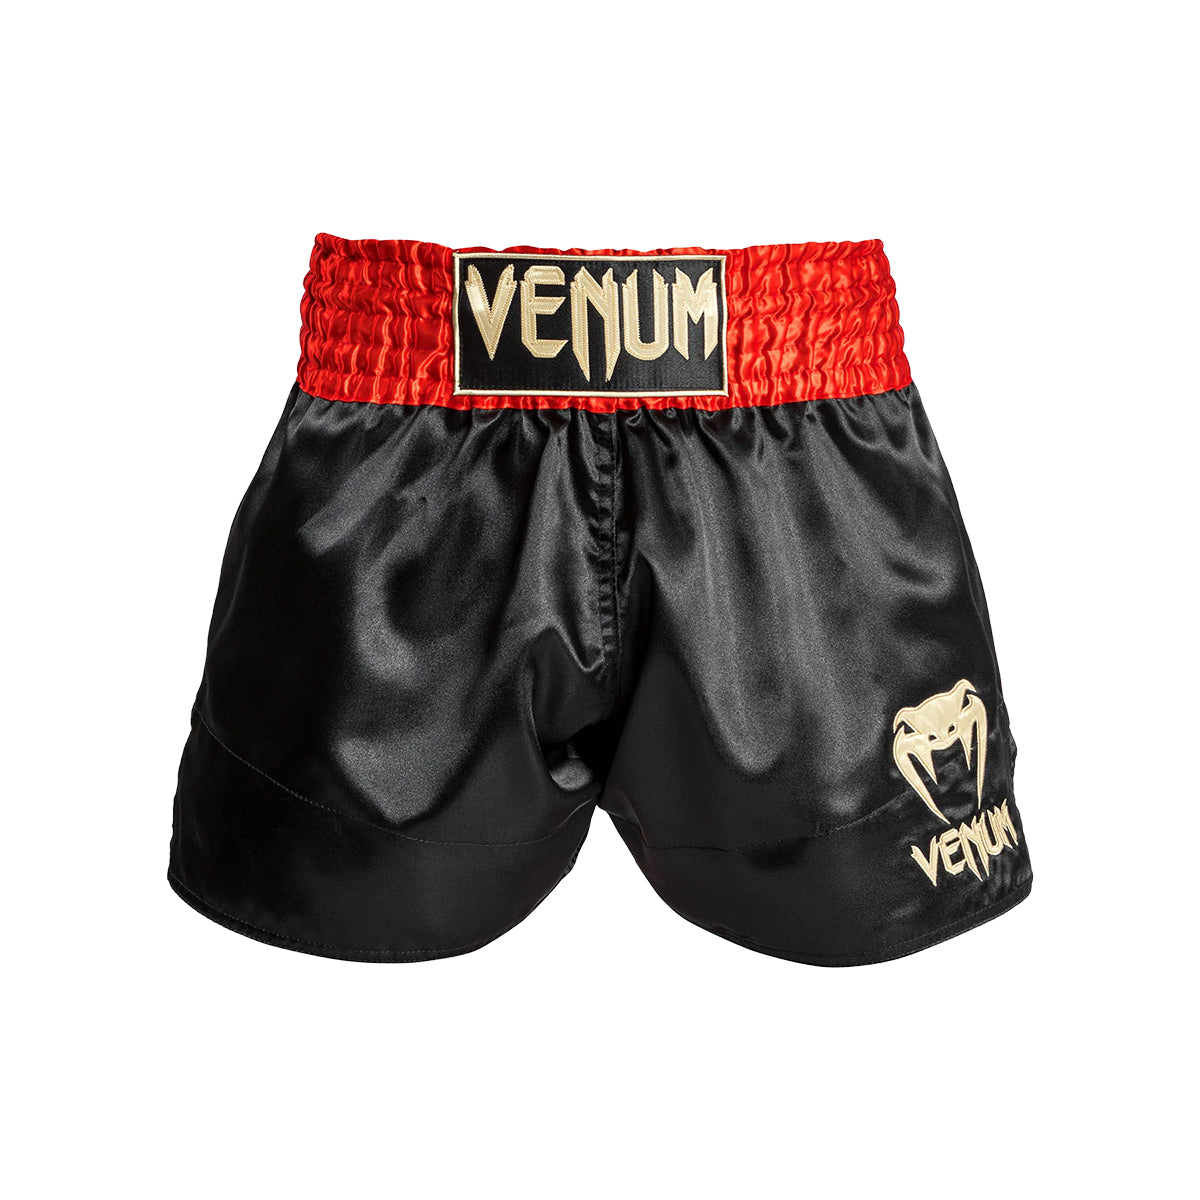 Venum Classic Muay Thai Shorts  -  Red/Black/Gold